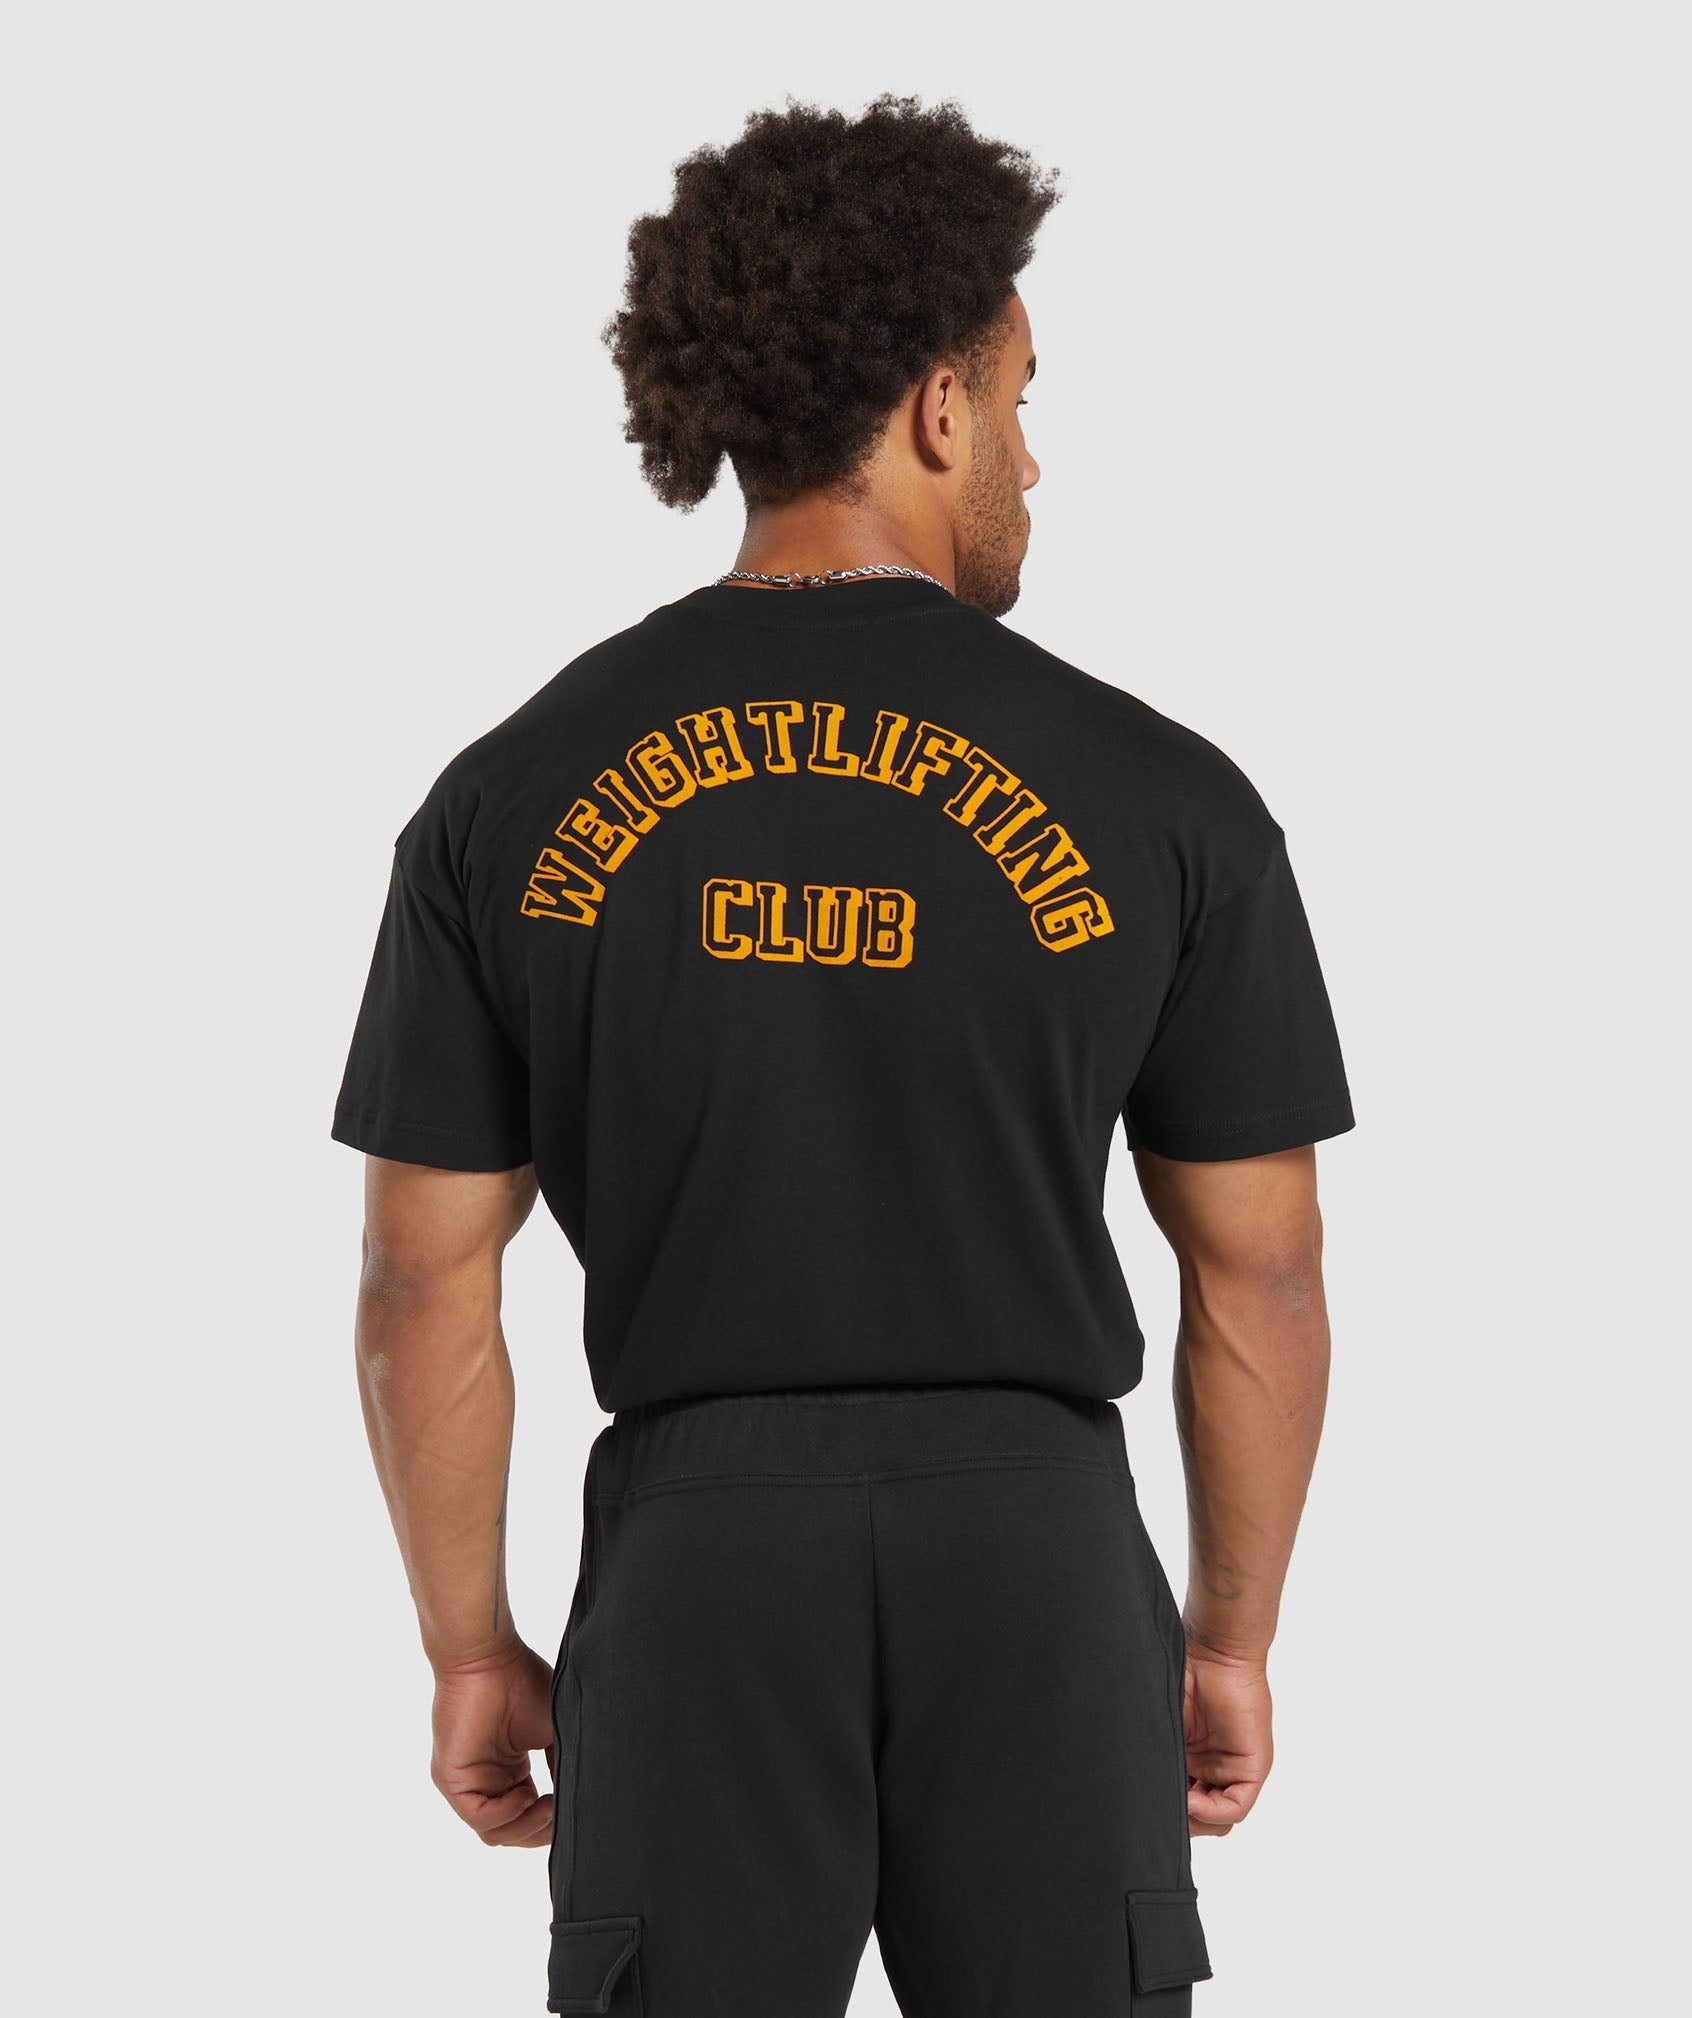 Weightlifting Club T-Shirt